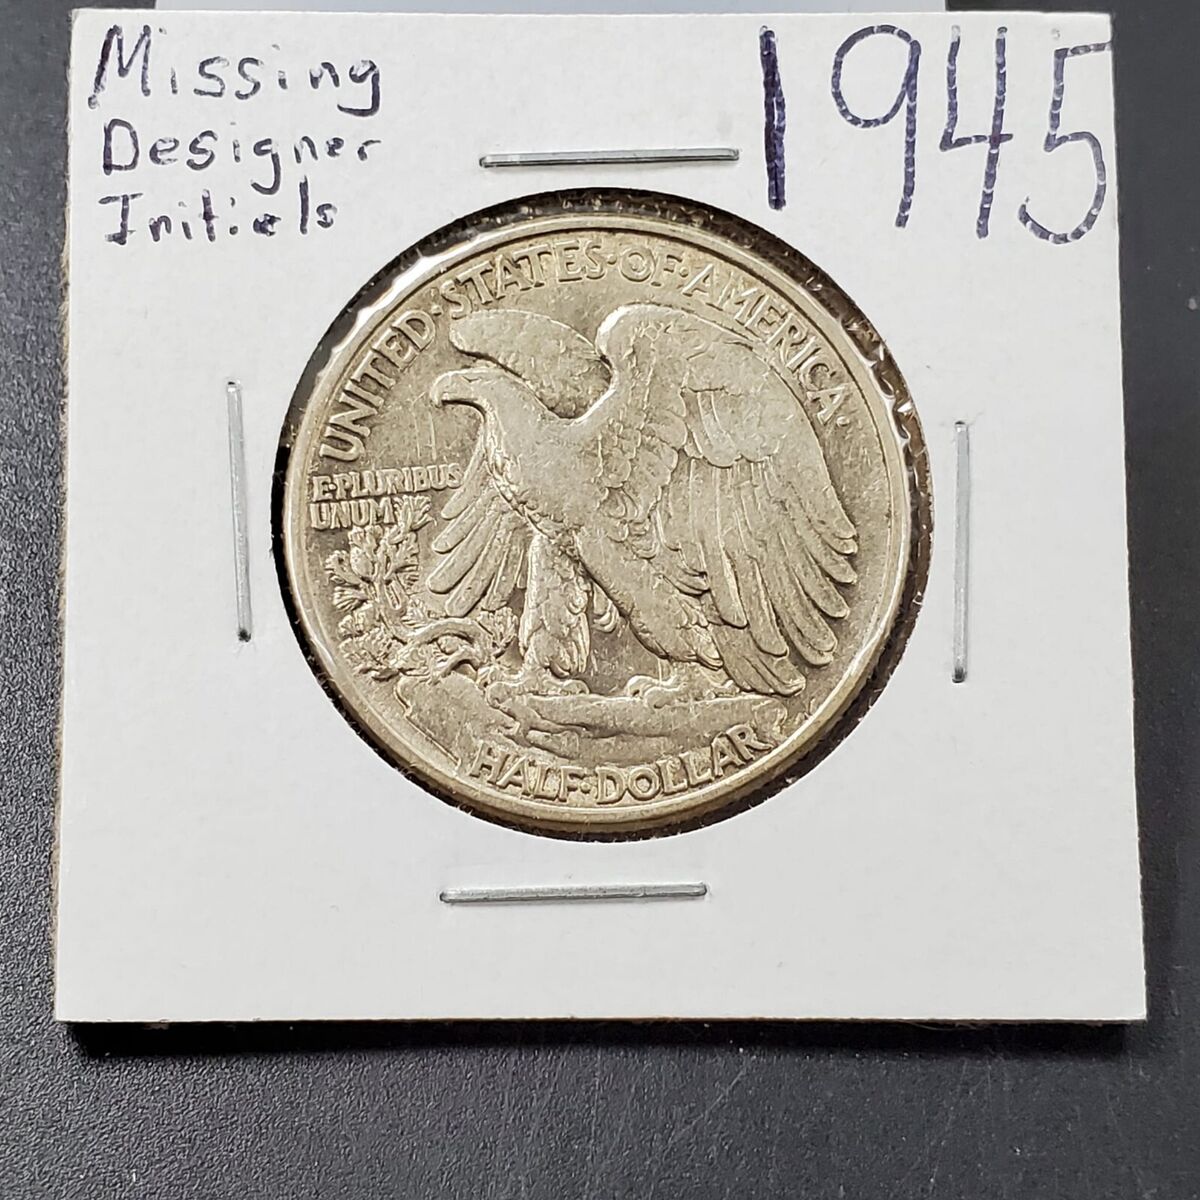 1945 Half Dollar with Missing Artist Initials Error